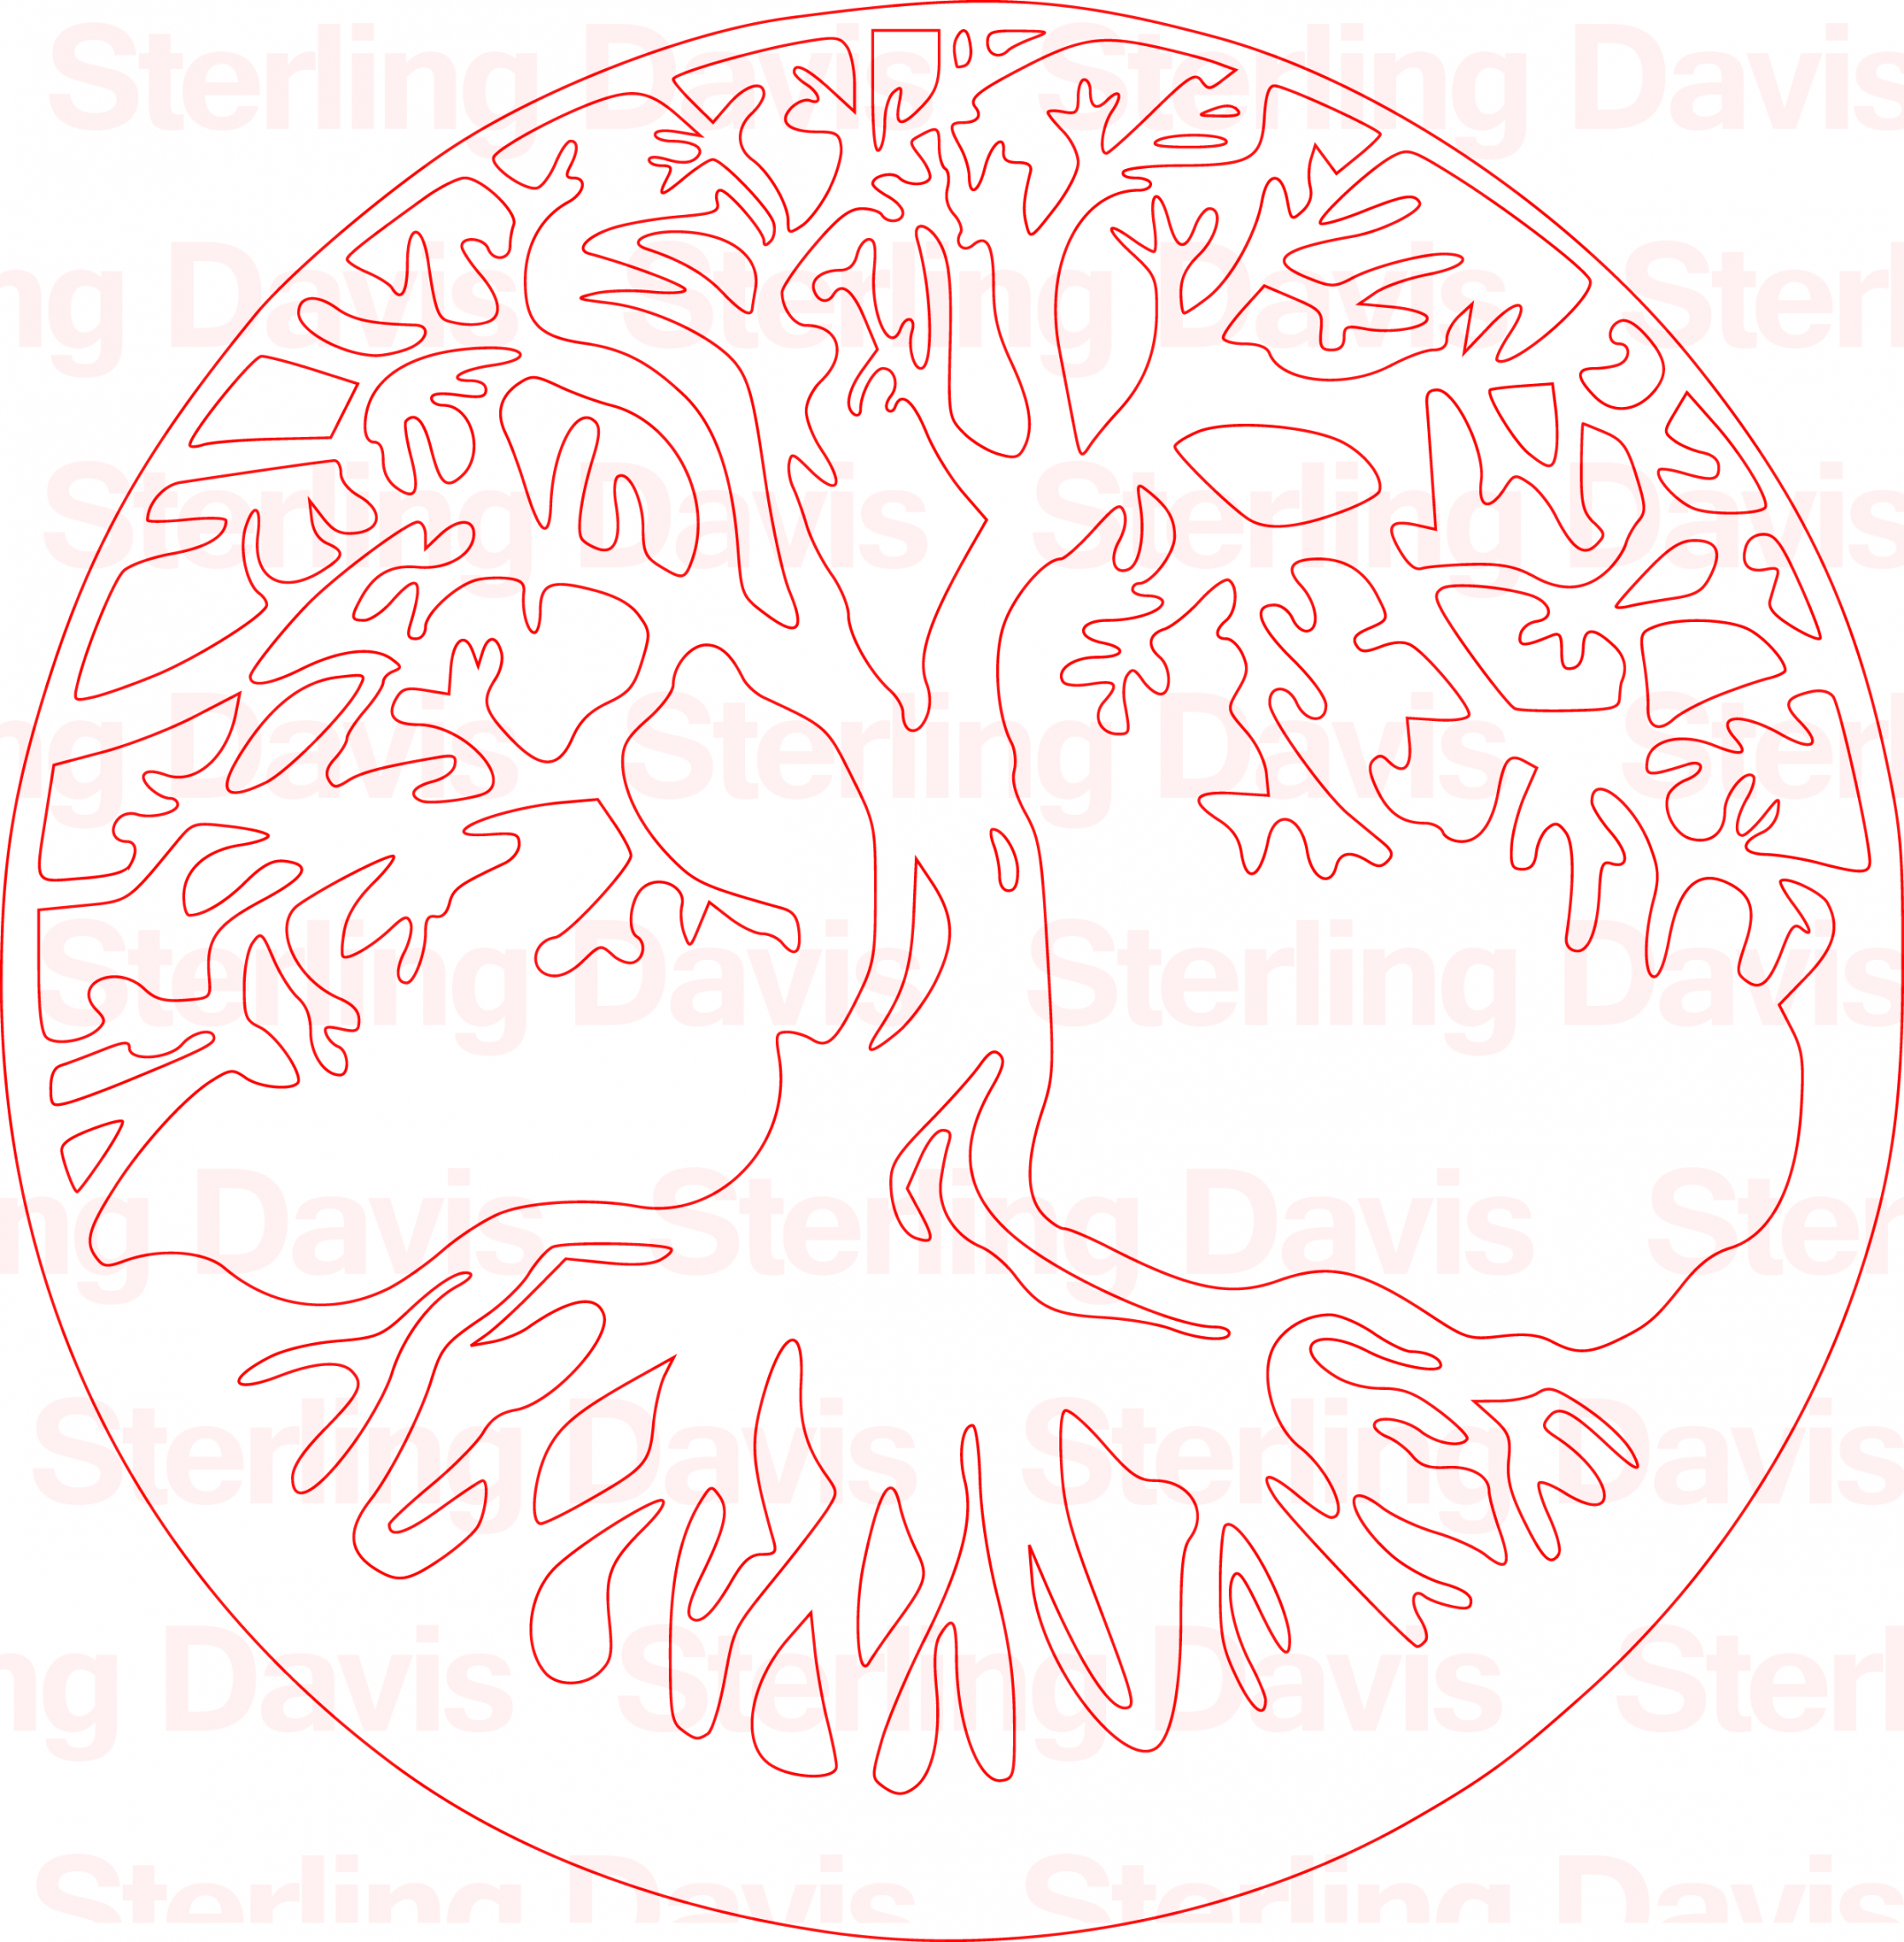 Tree of life Scroll Saw Pattern by Sterling Davis – Maker Patterns